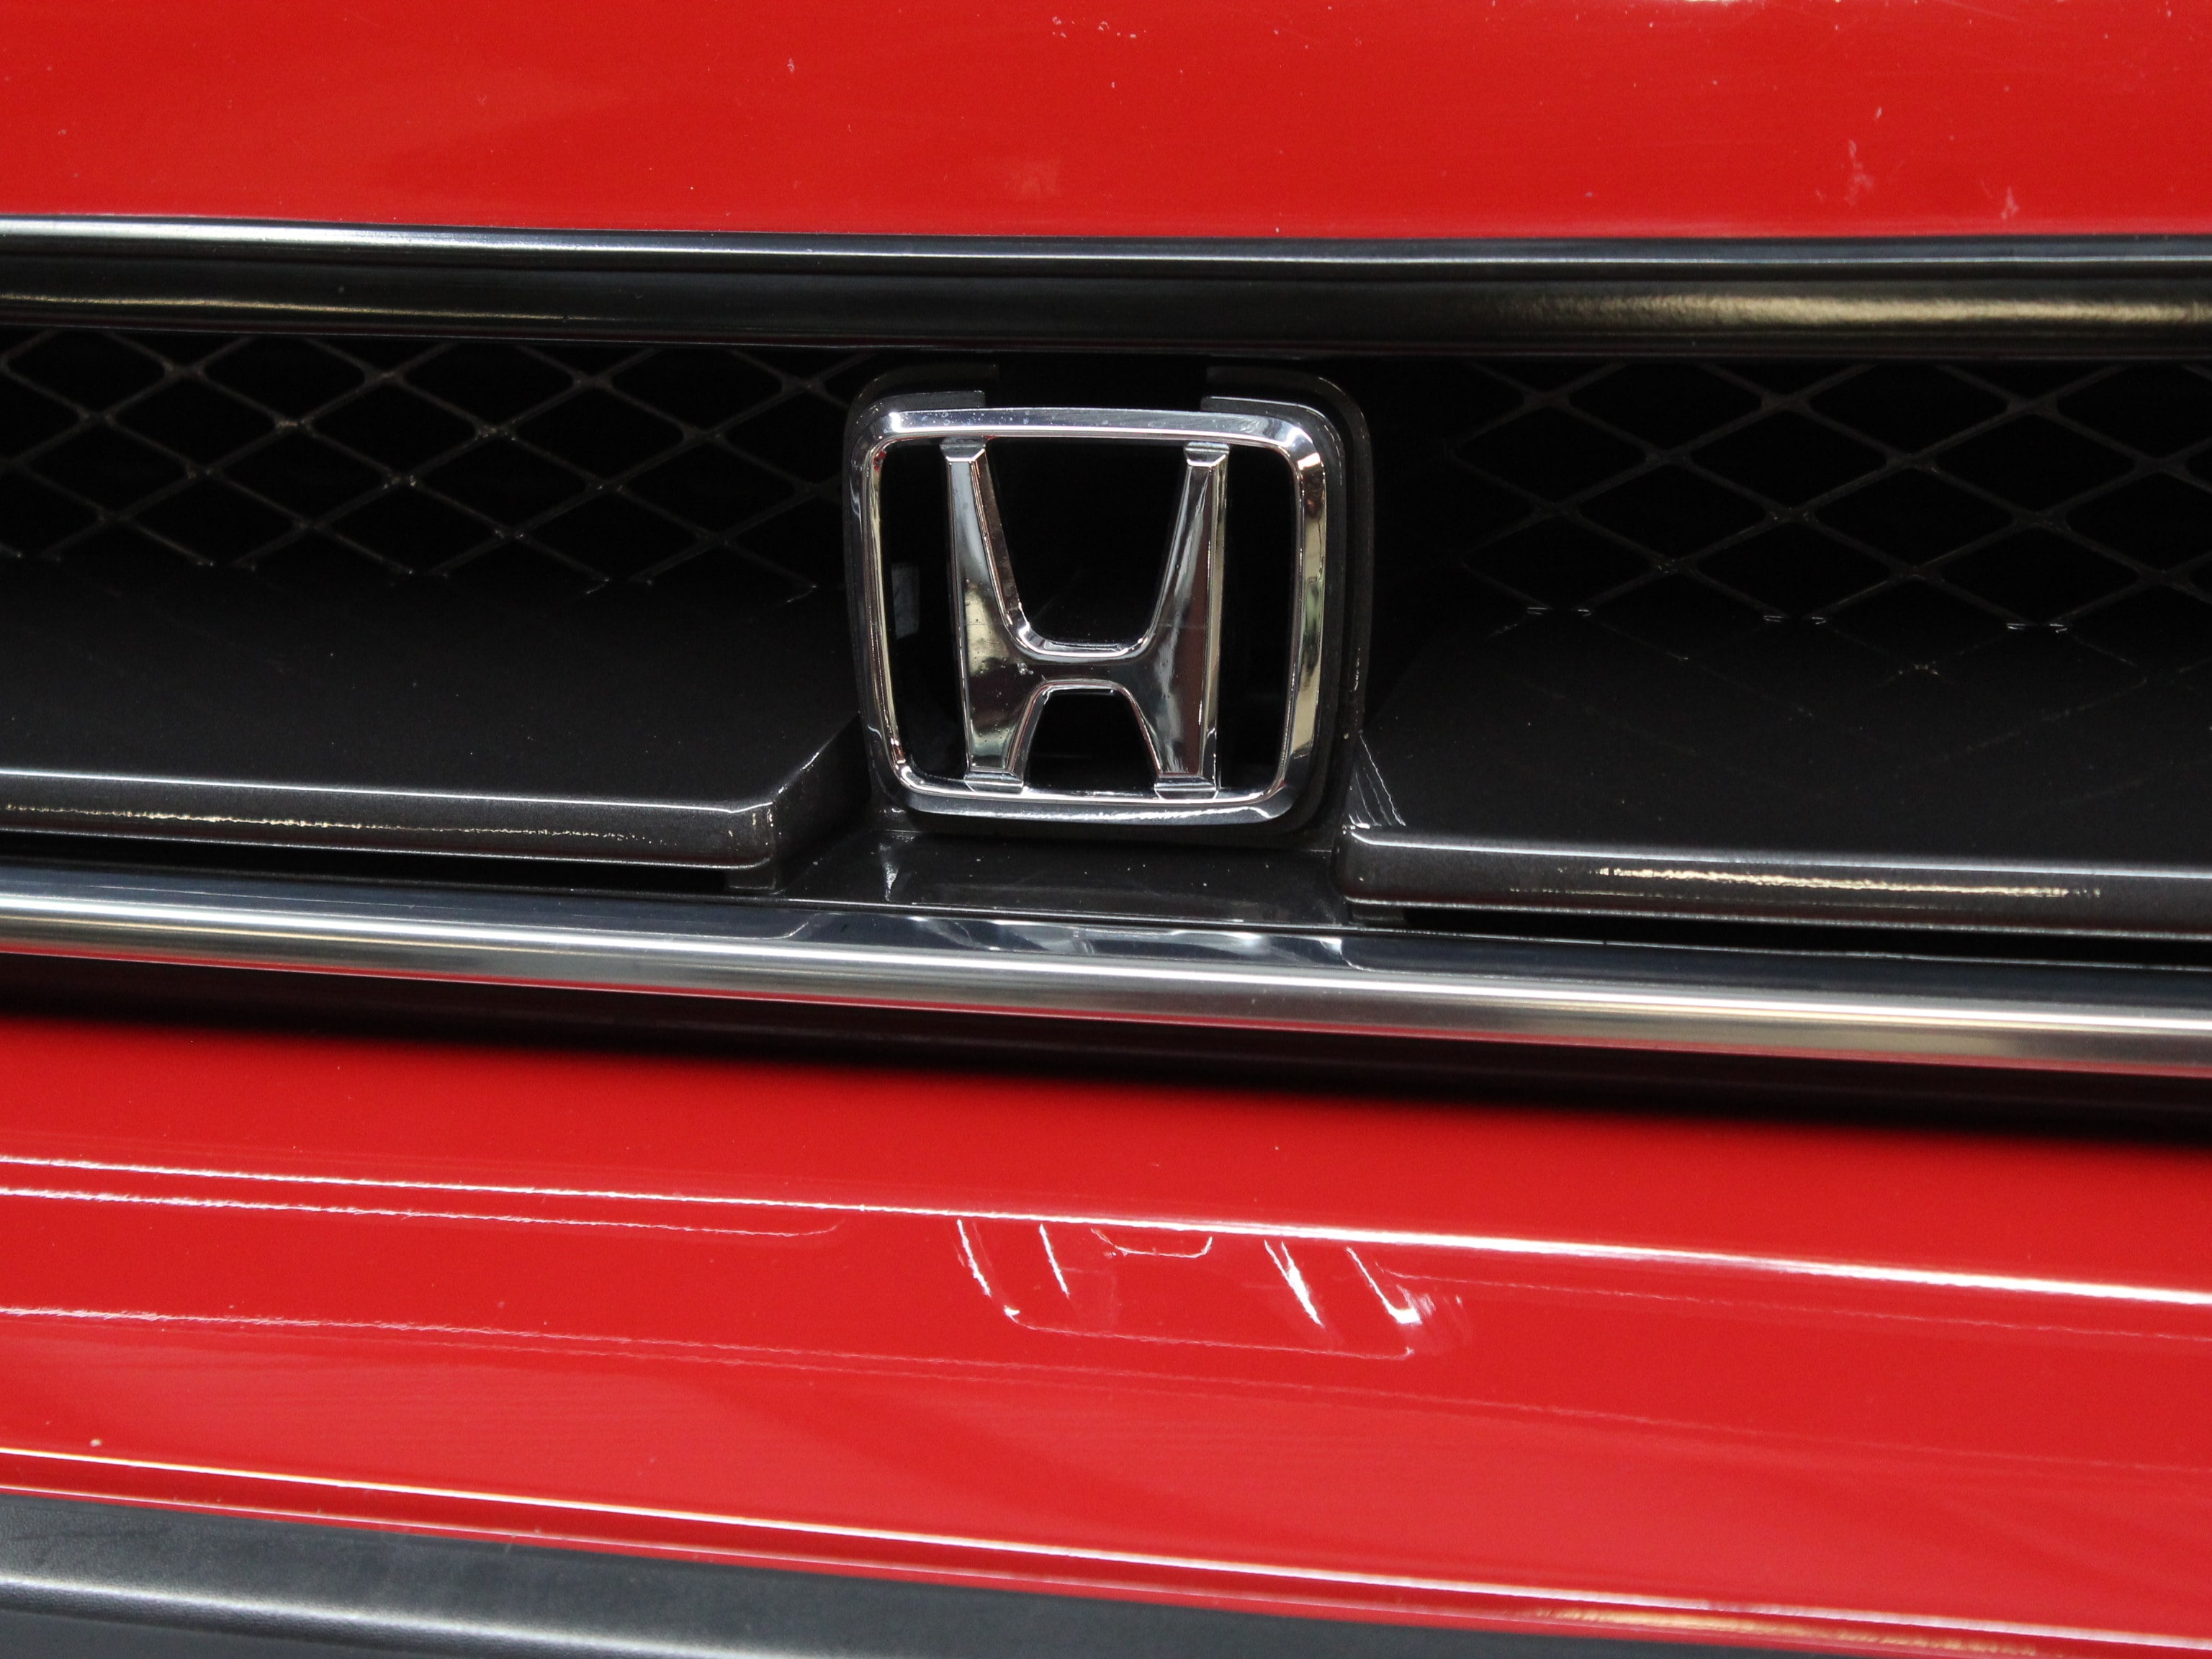 1987 Honda Prelude 47